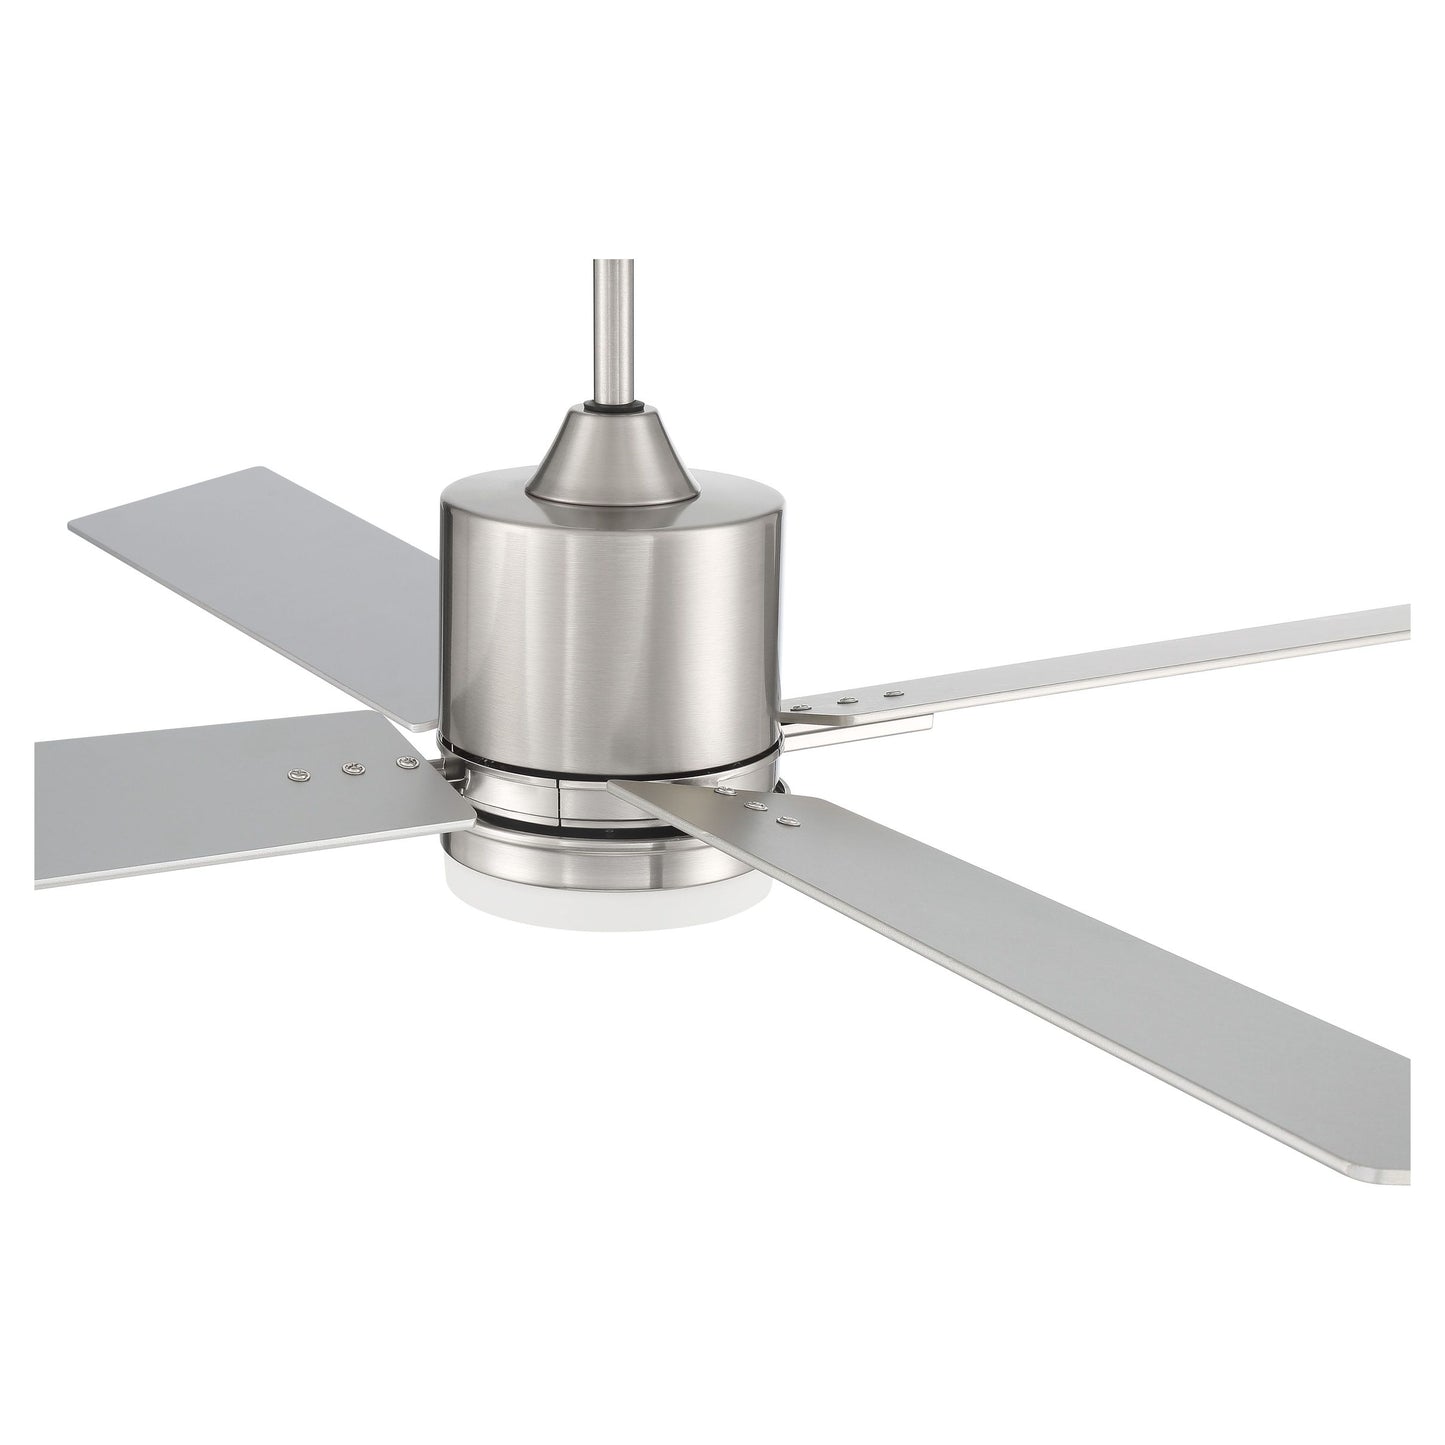 TEA52BNK4 - Teana 52" 4 Blade Ceiling Fan with Light Kit - Brushed Polished Nickel